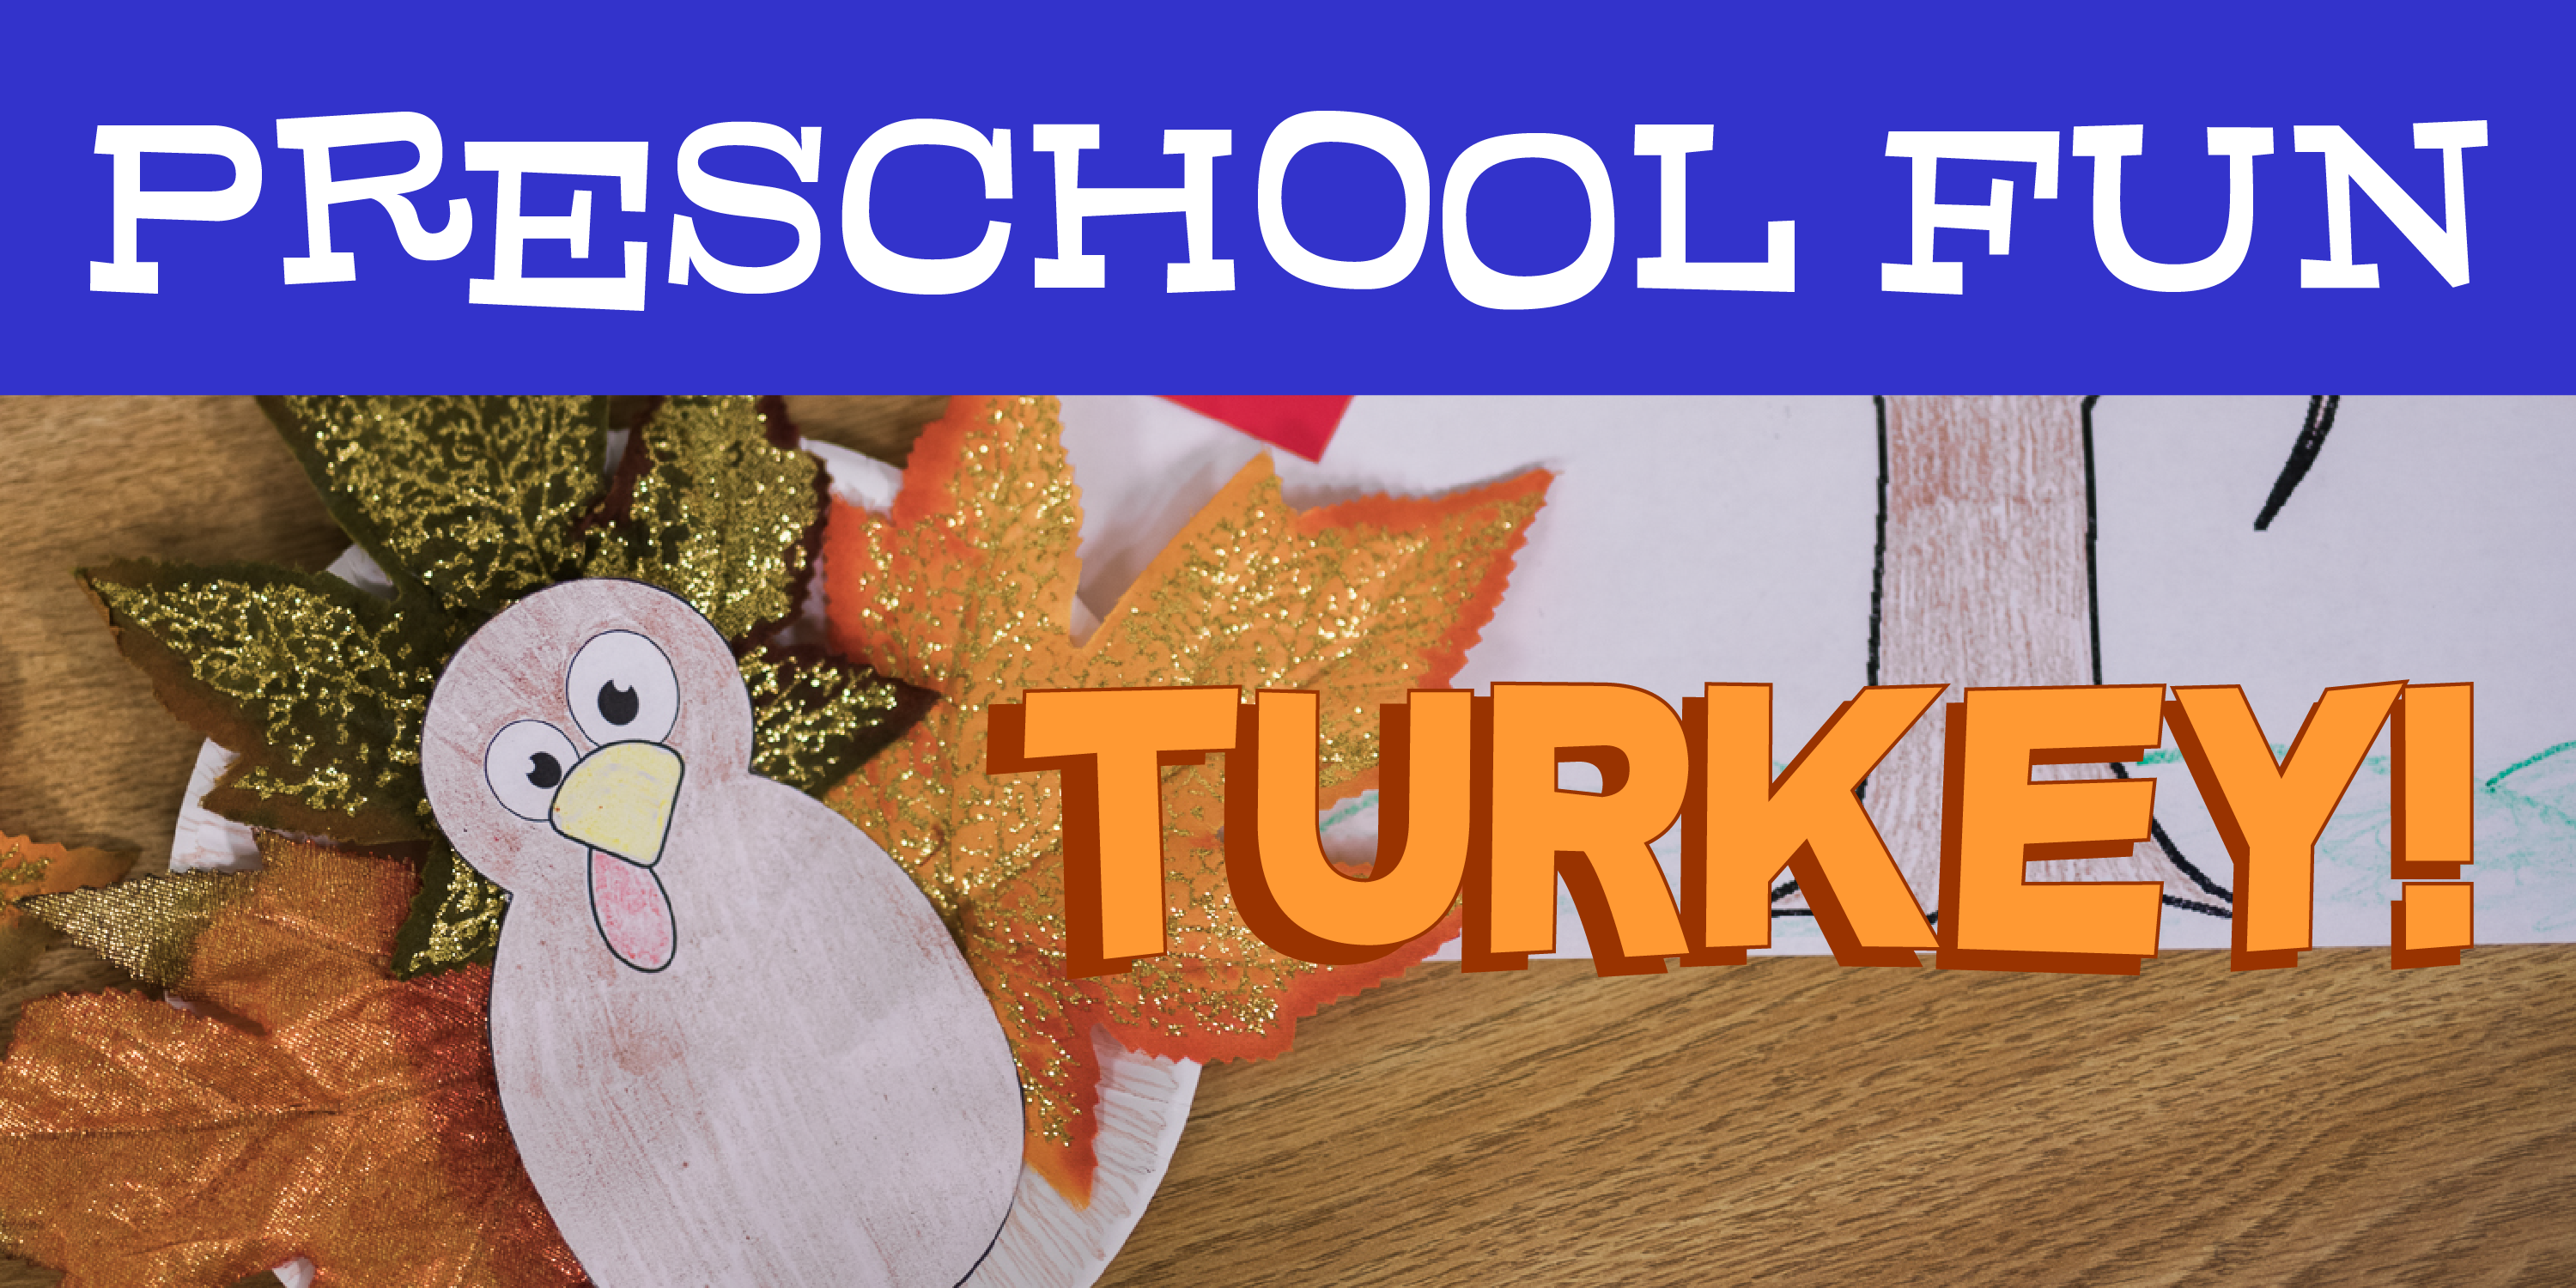 Preschool Fun: Turkey!